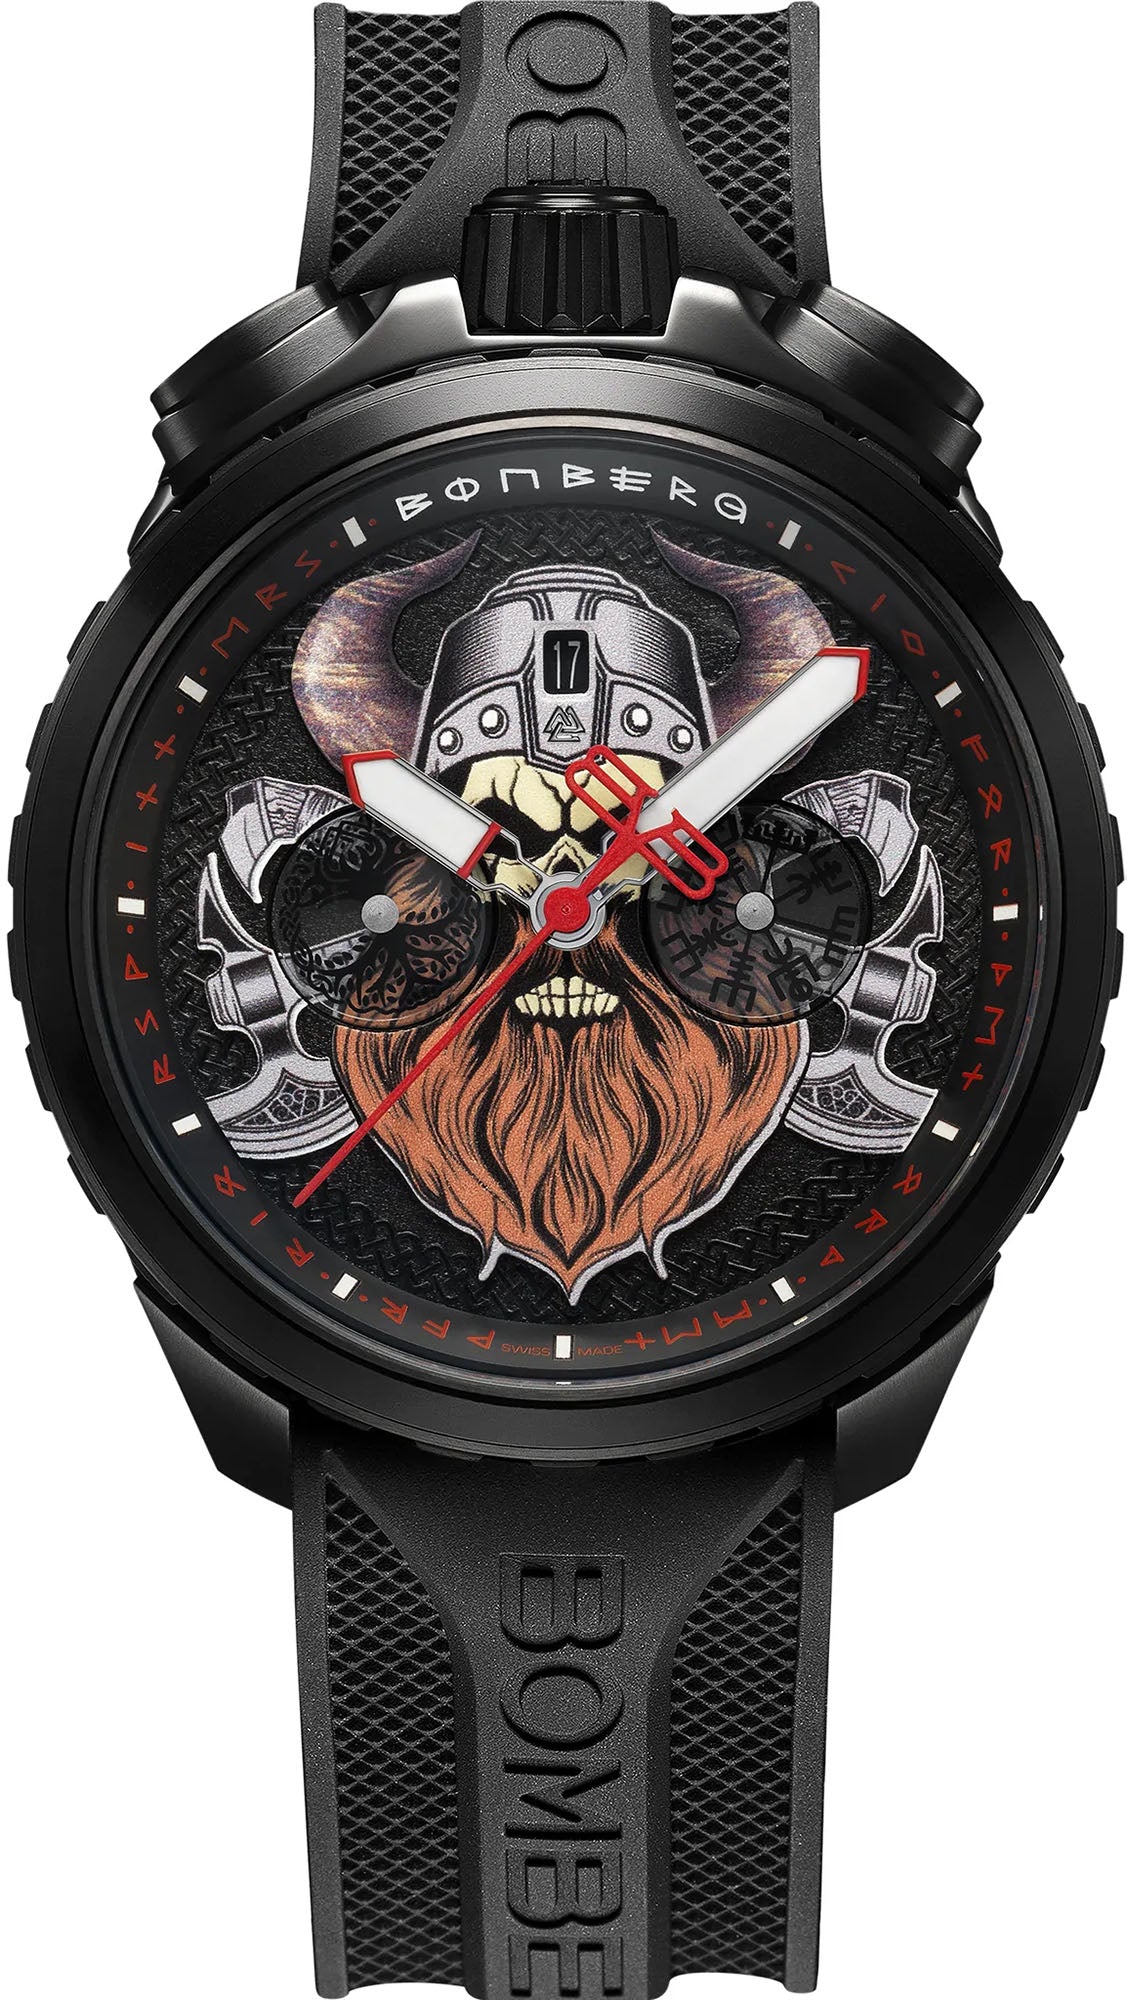 Bomberg Watch Bolt-68 Heritage Viking Limited Edition